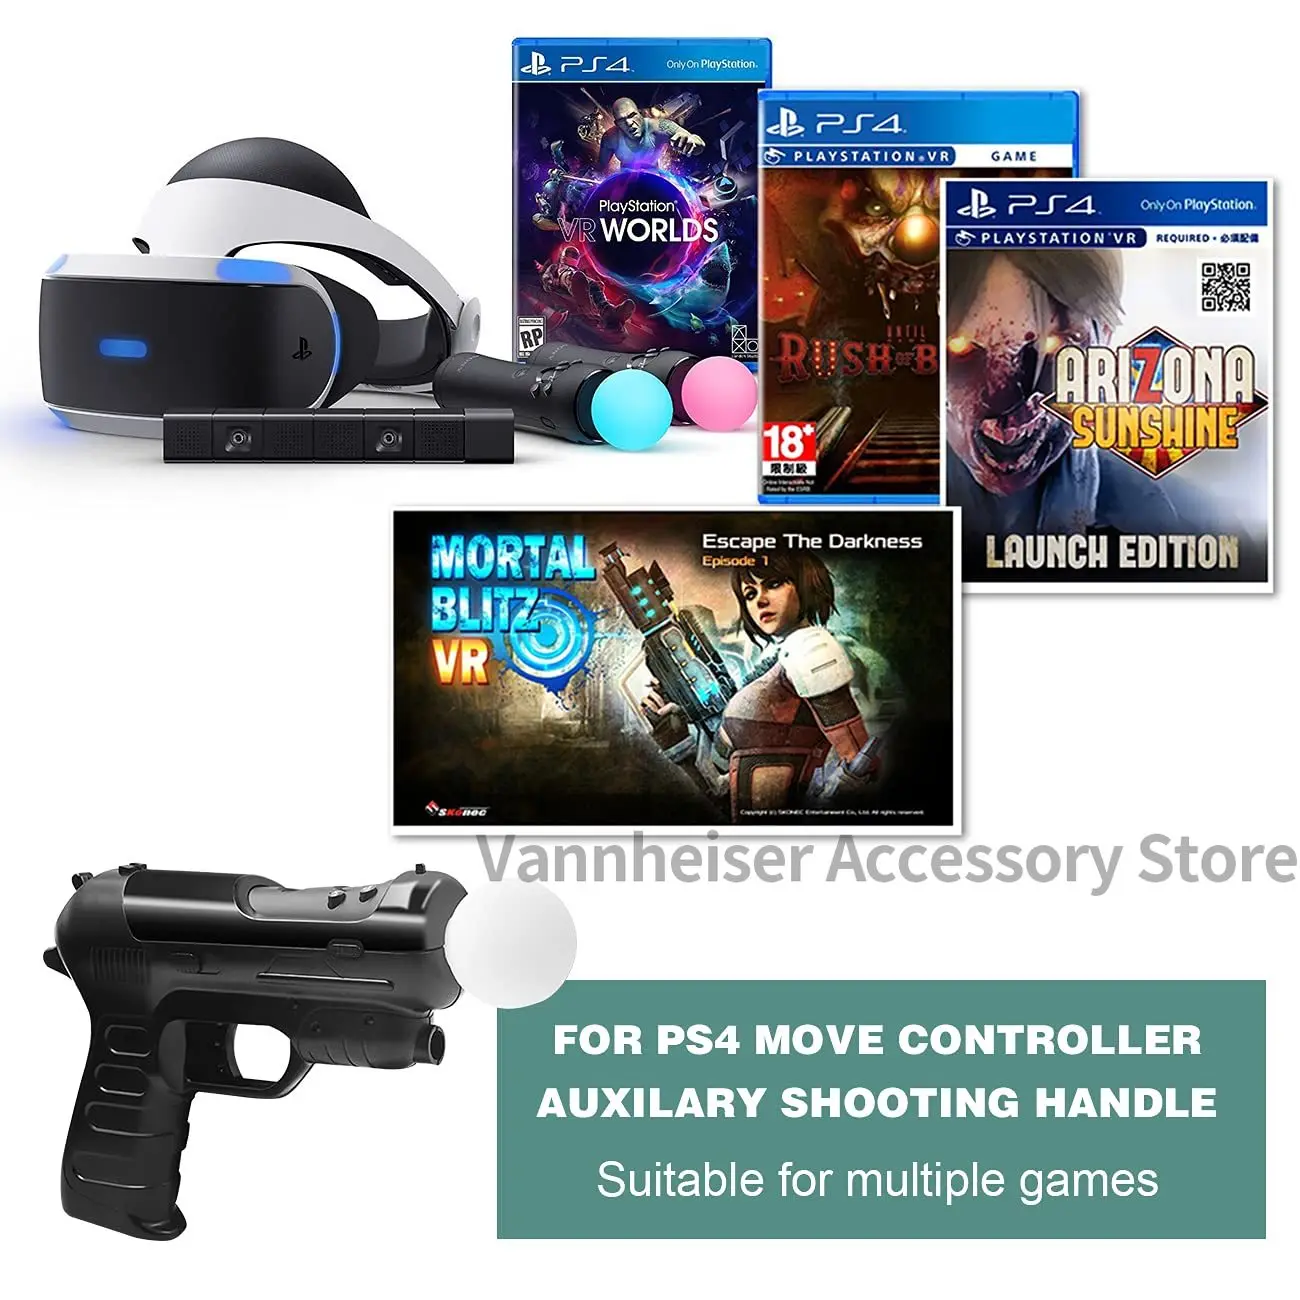 eventyr Kor Demon Play Playstation Vr Gun Controller | Ps4 Vr Gun Controller Games | Ps4 Vr Games  Accessories - Accessories - Aliexpress